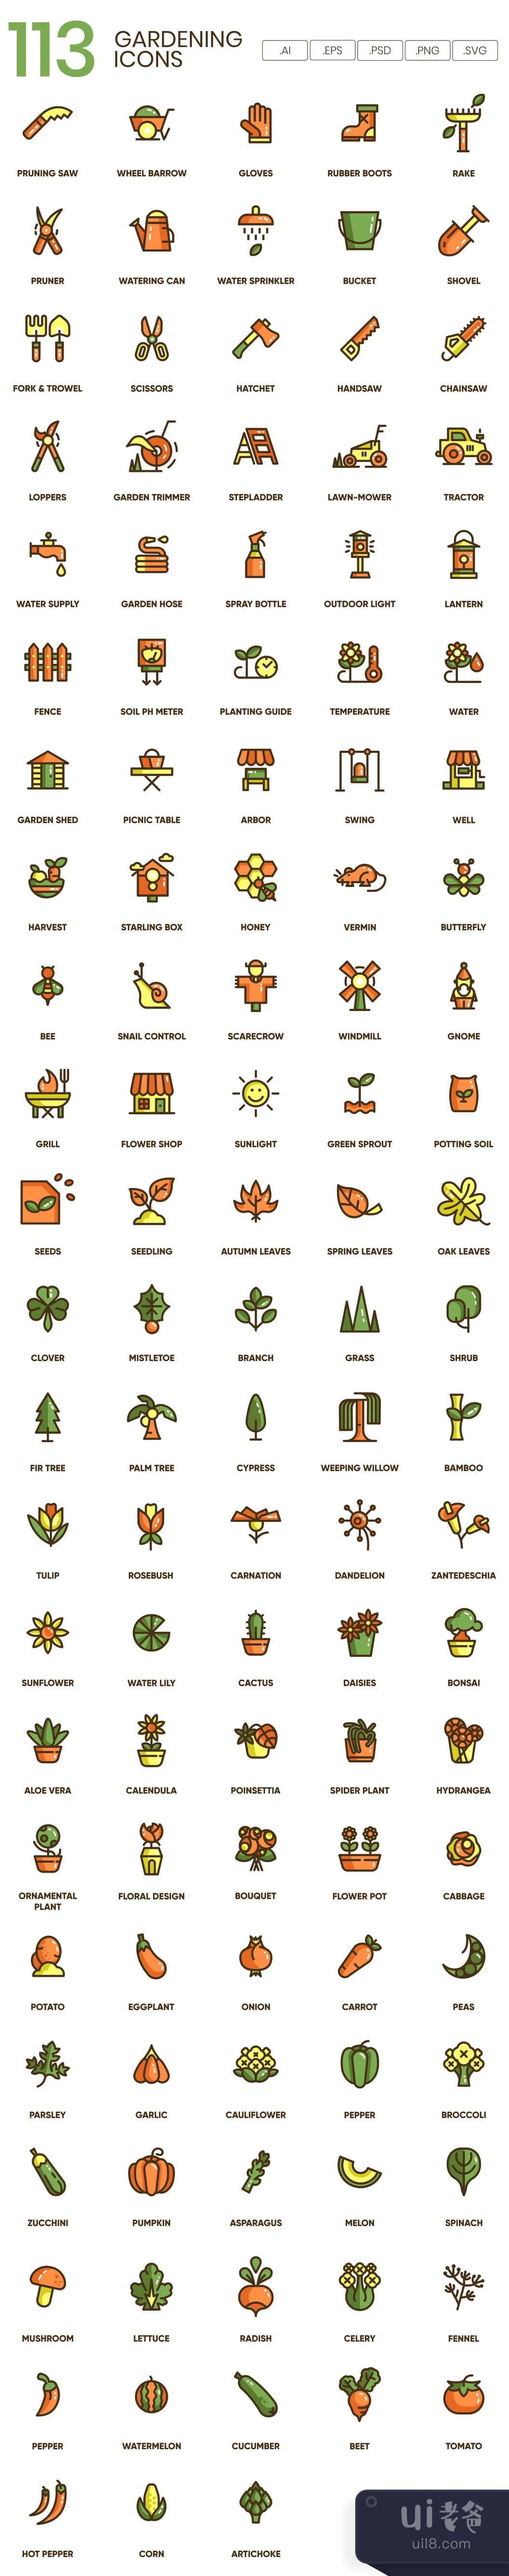 113个园艺图标 (113 Gardening Icons)插图1